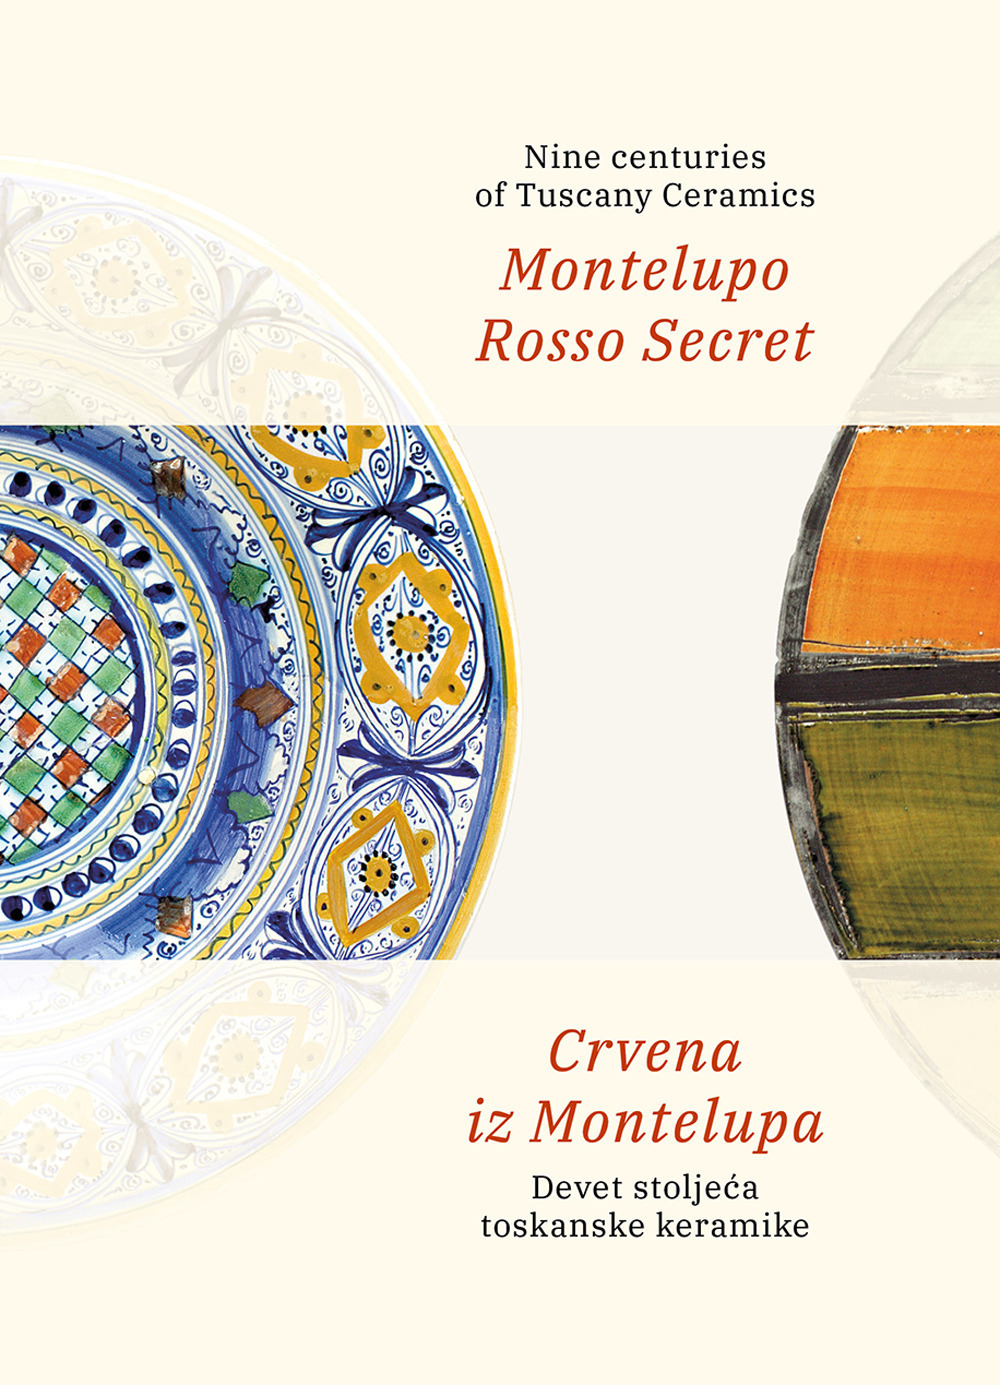 Montelupo Rosso Secret. Nine centuries of Tuscany Ceramics-Crvena iz Montelupa. Devet stoljeca toskanske keramike. Ediz. bilingue